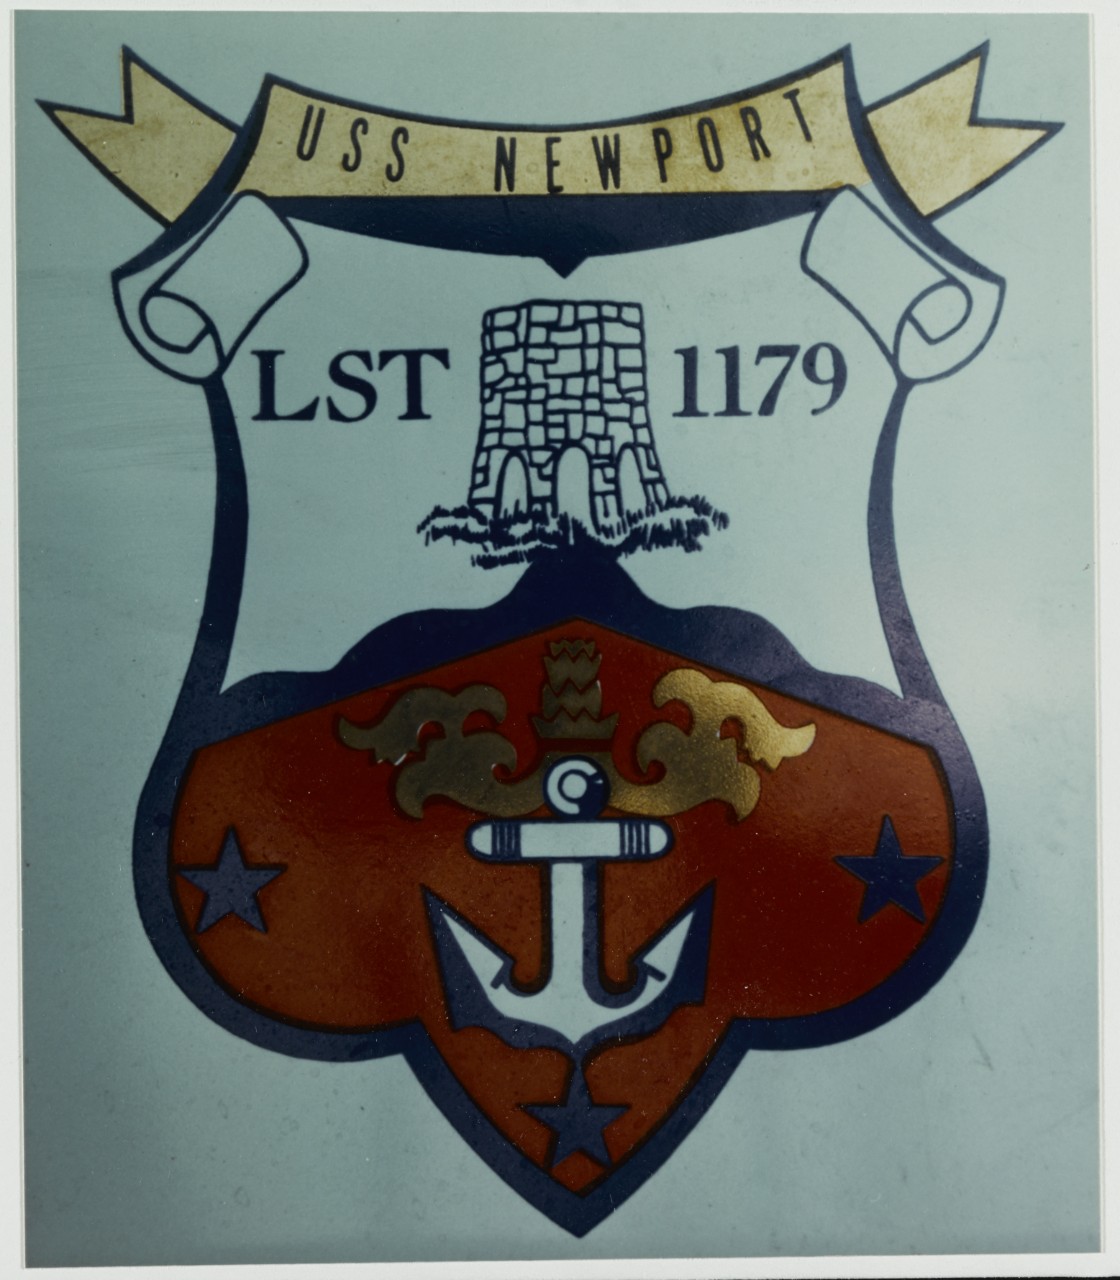 Insignia: USS NEWPORT (LST-1179)